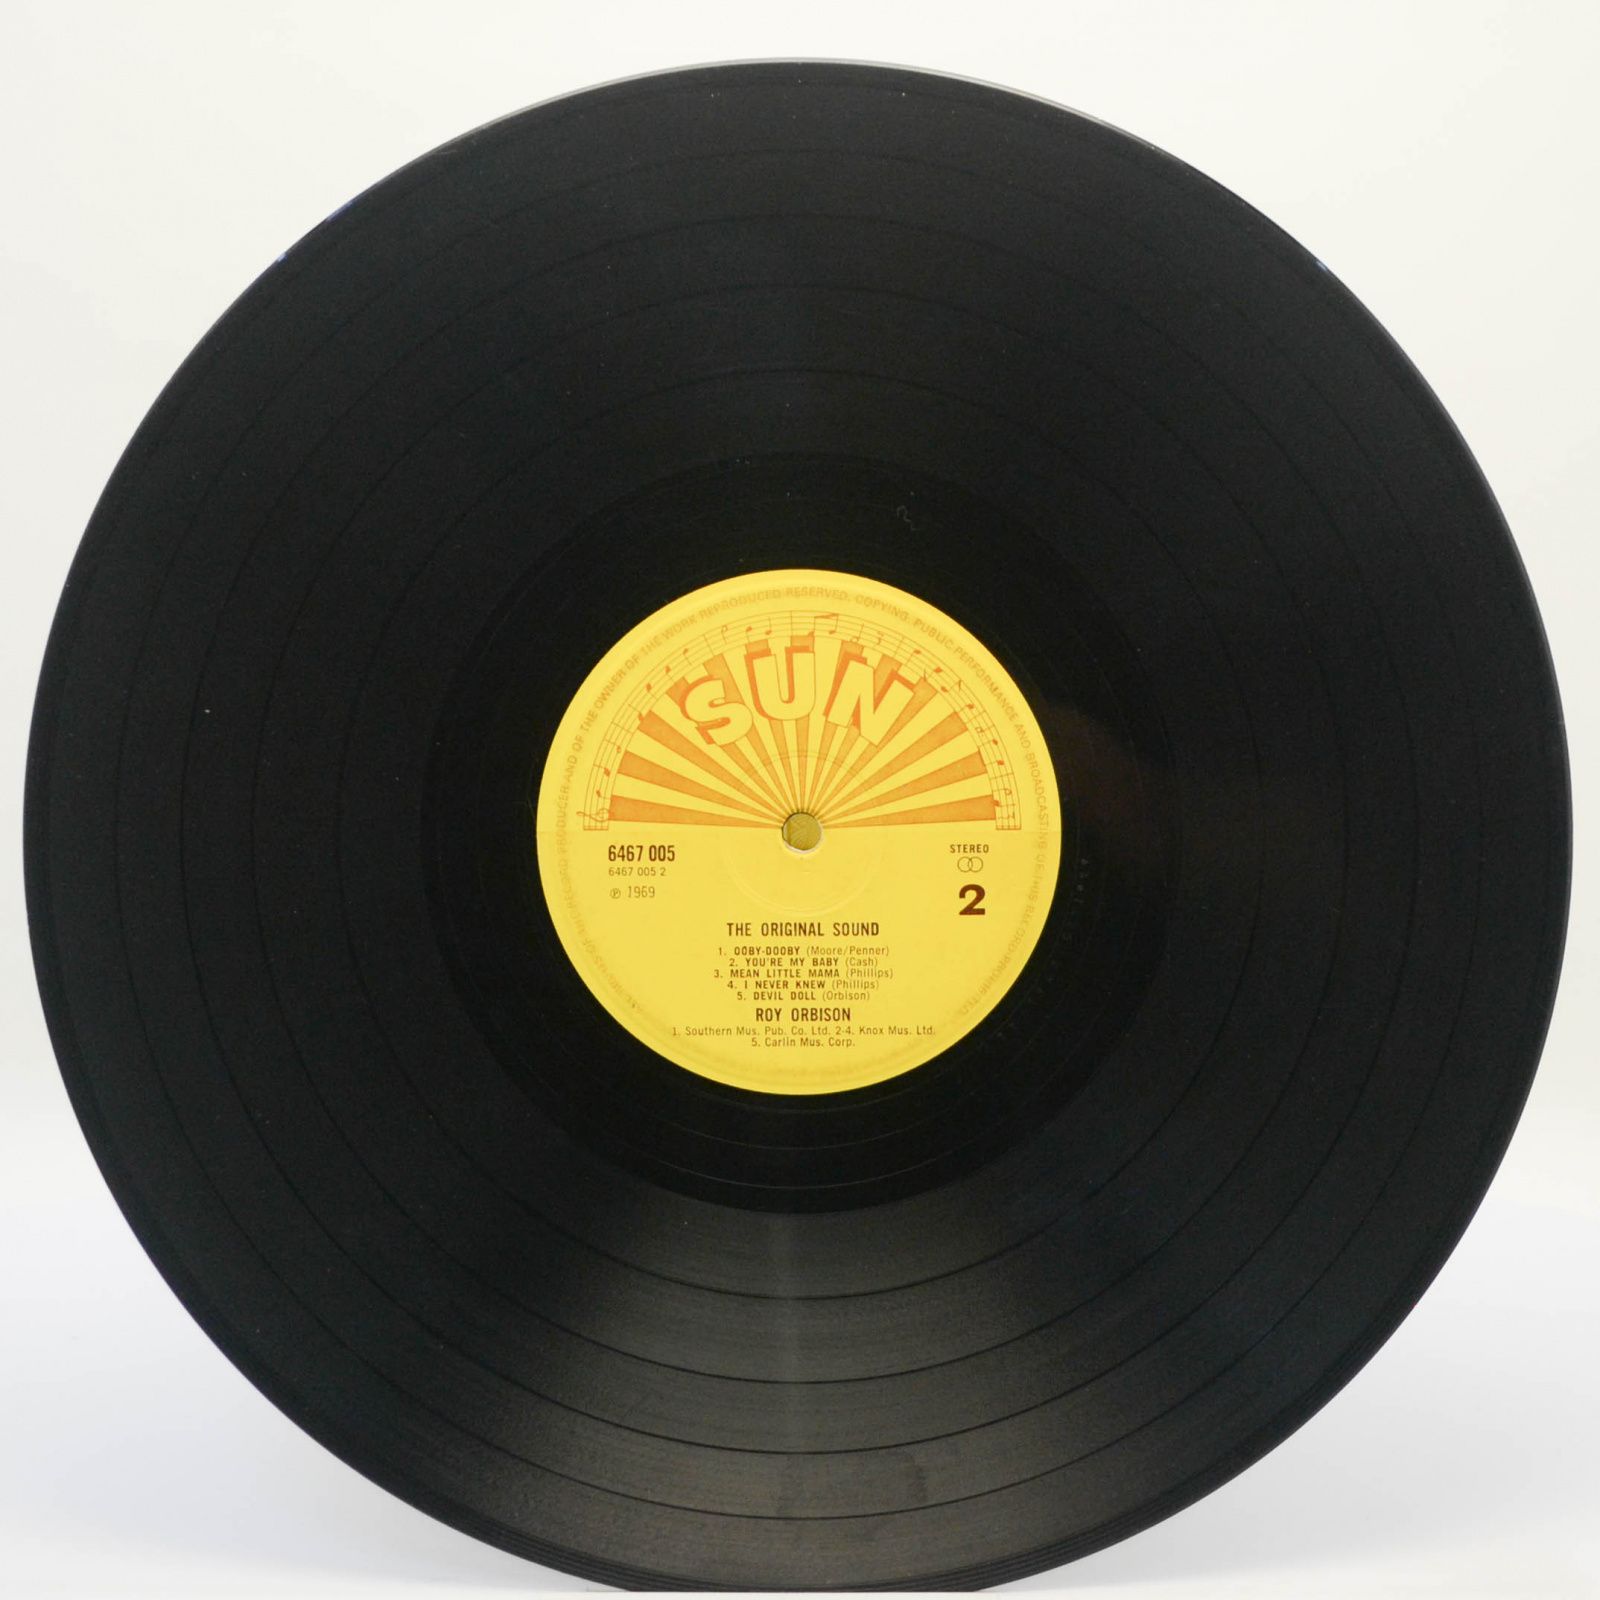 Roy Orbison — The Original Sound, 1972